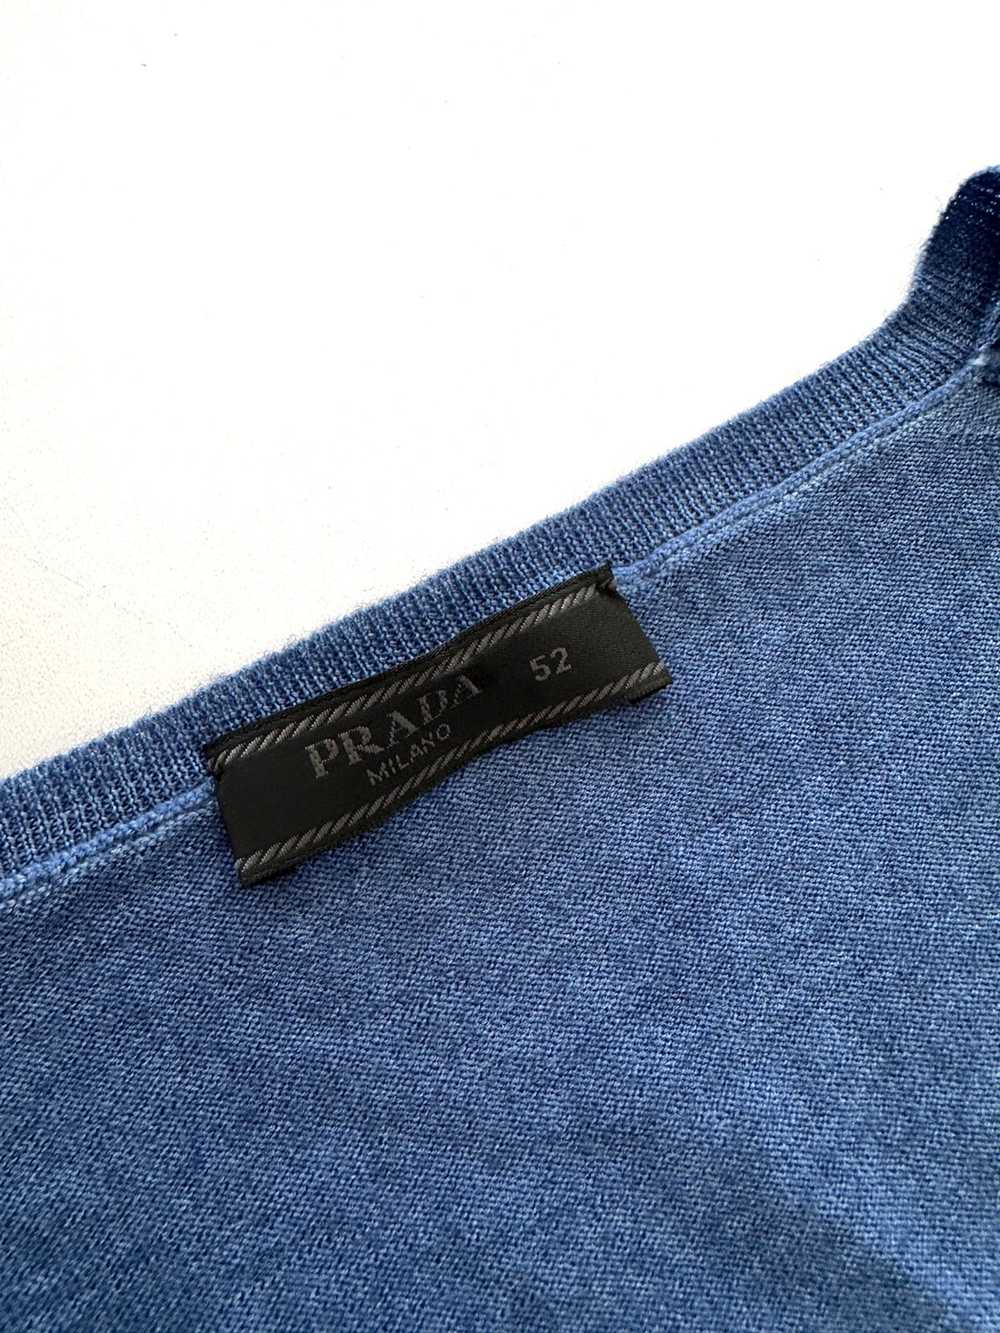 Prada Prada Wool Sweater Cardigan - image 6